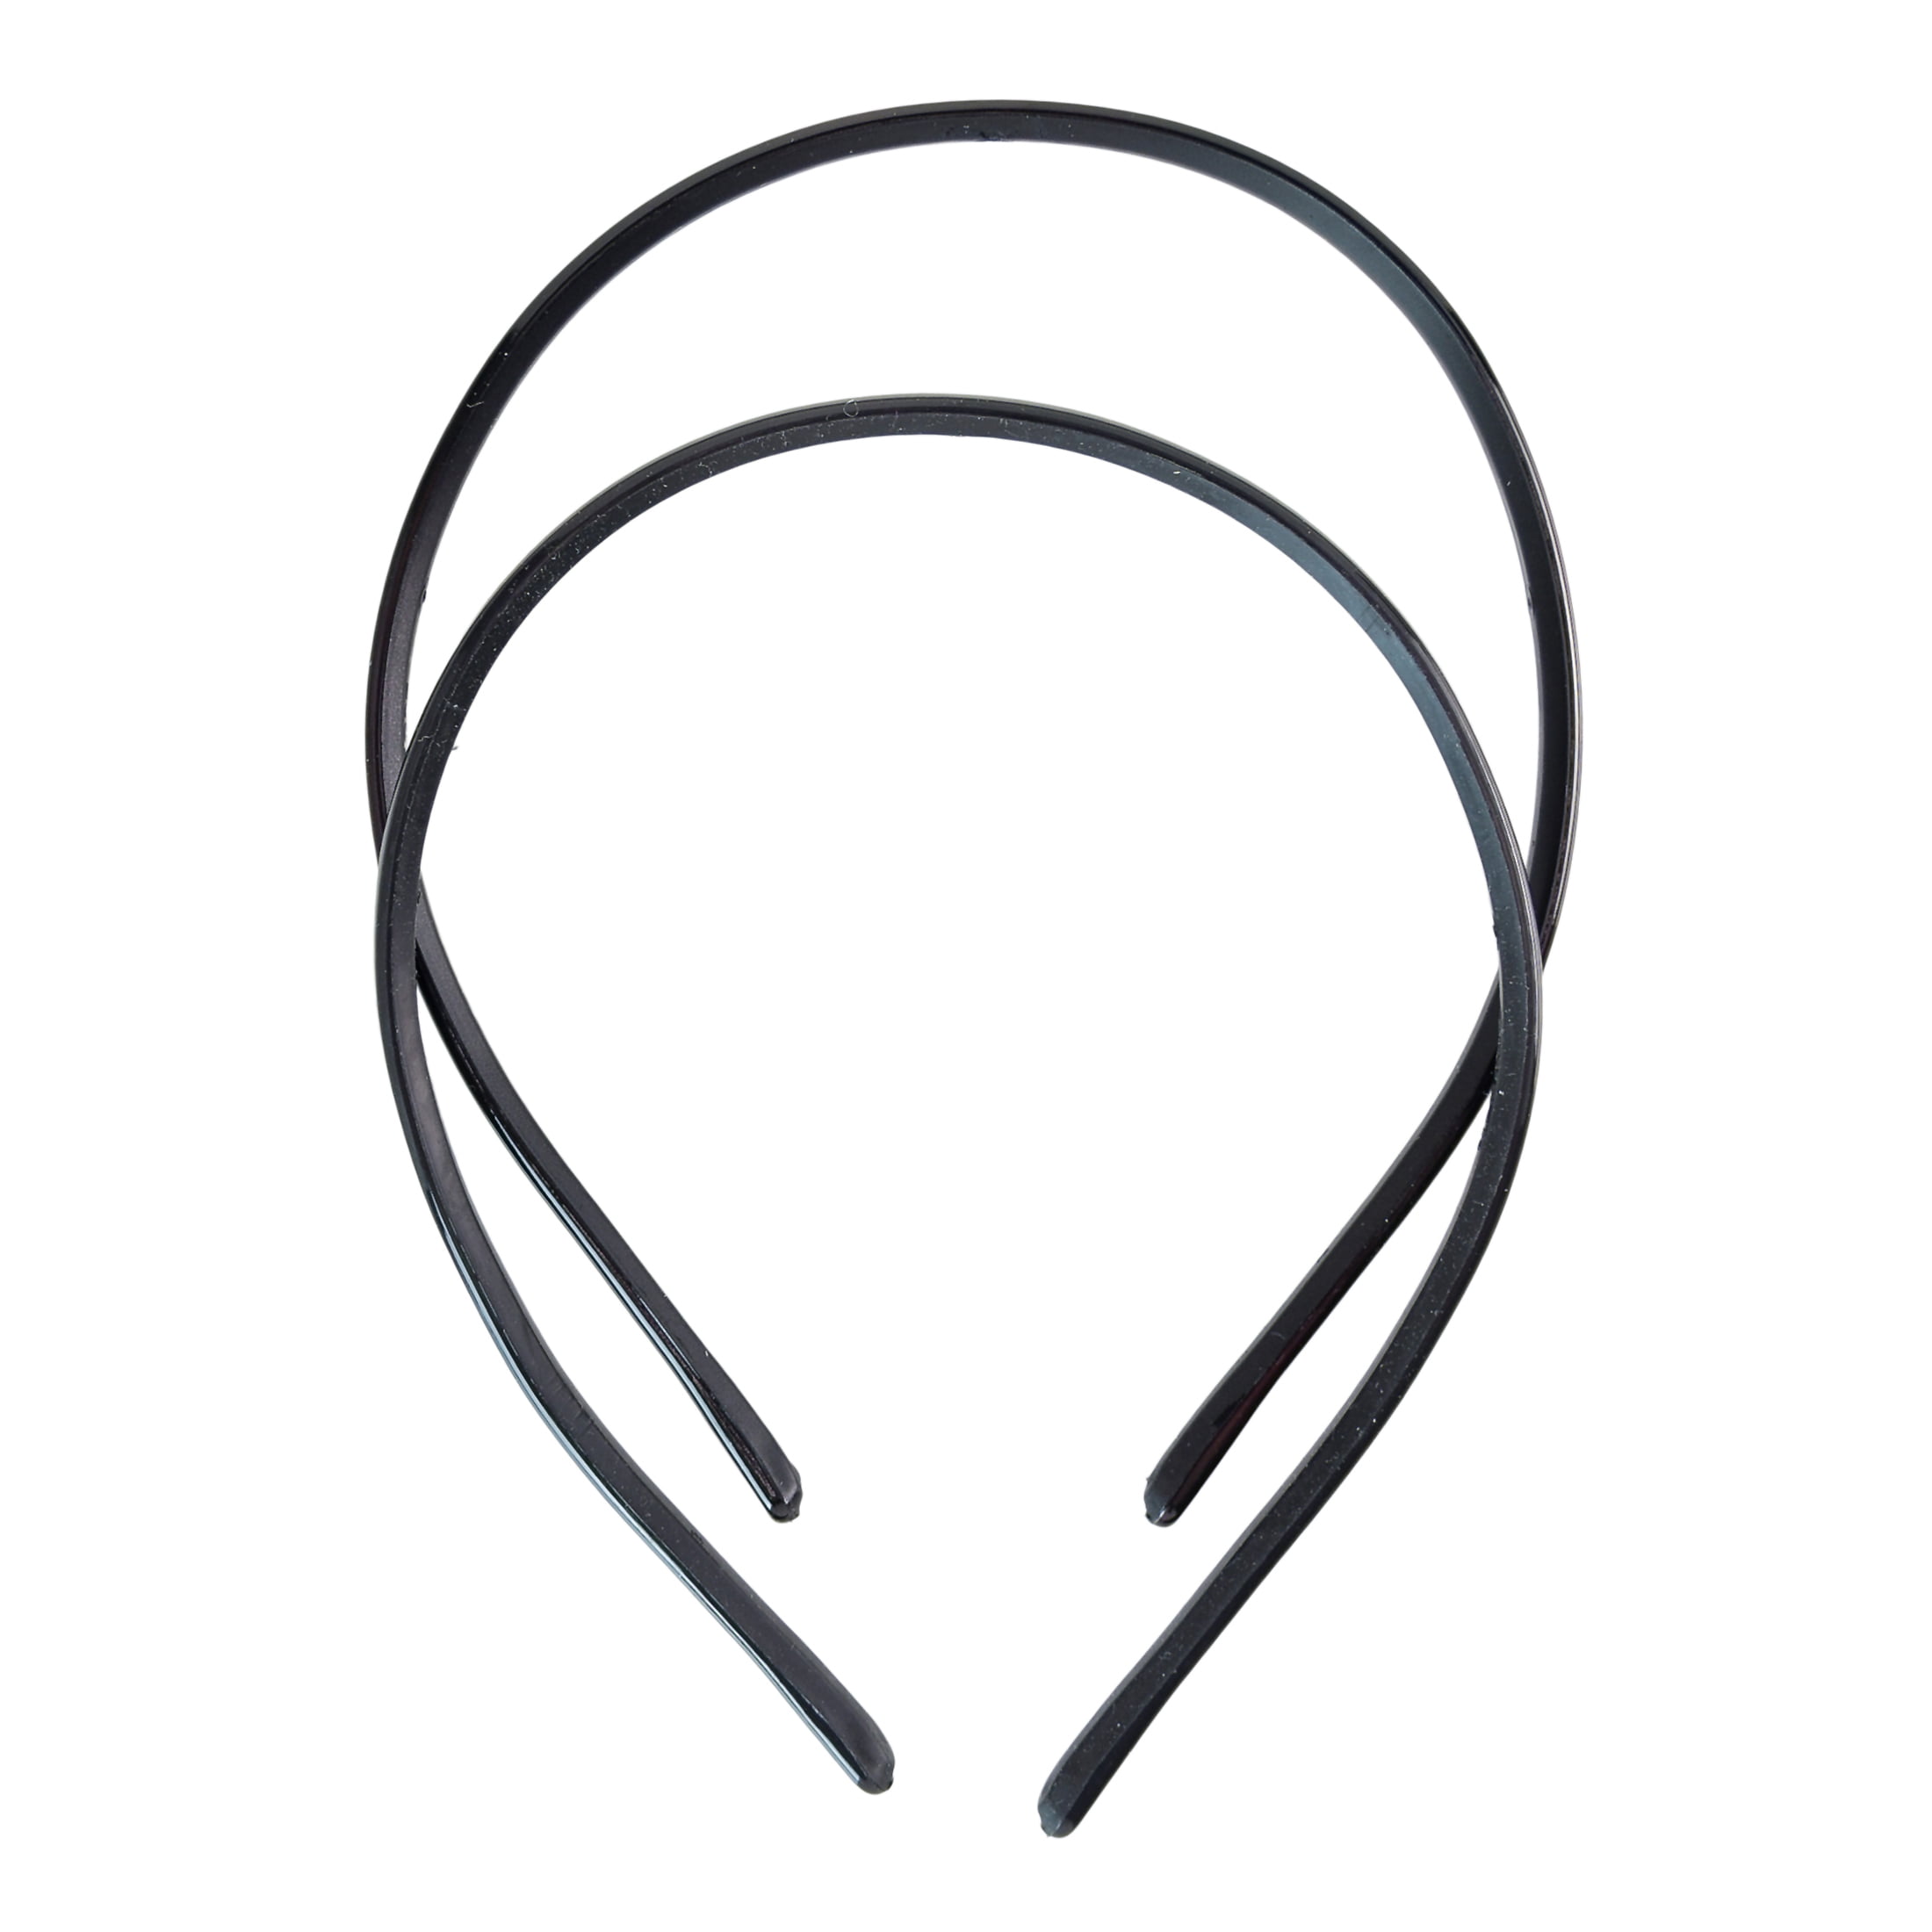 Scunci No-Slip Grip Flexible Plastic Skinny Headbands in Black and Brown, 2 Ct